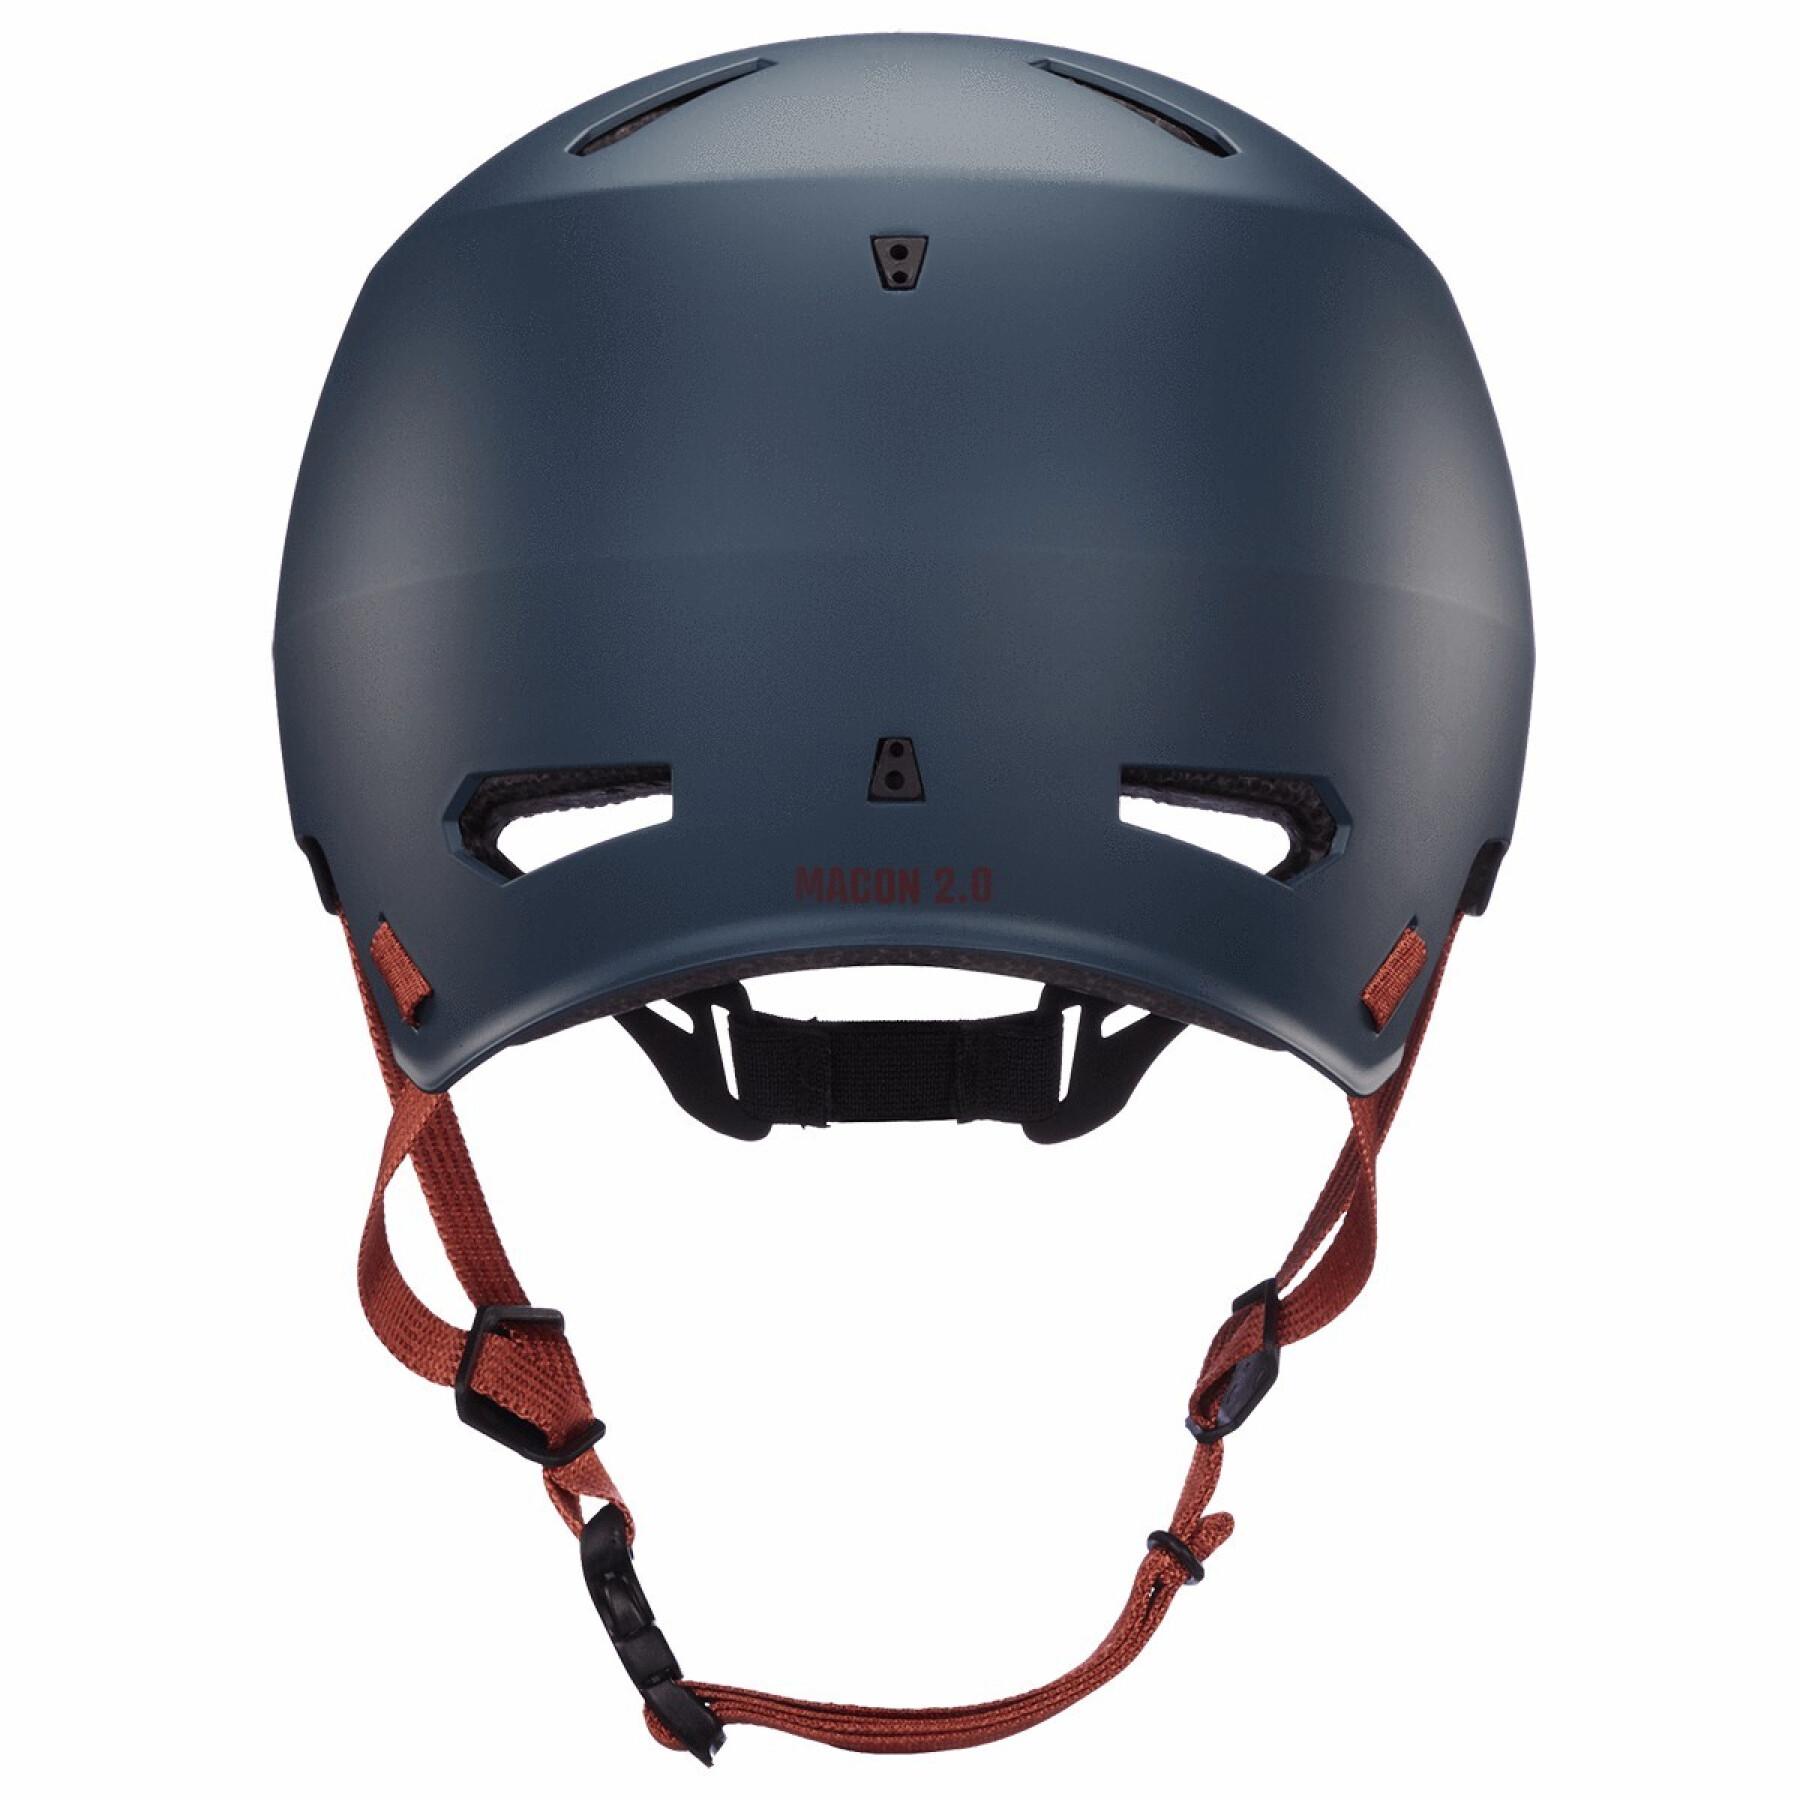 Bern Macon 2.0 MIPS helmet